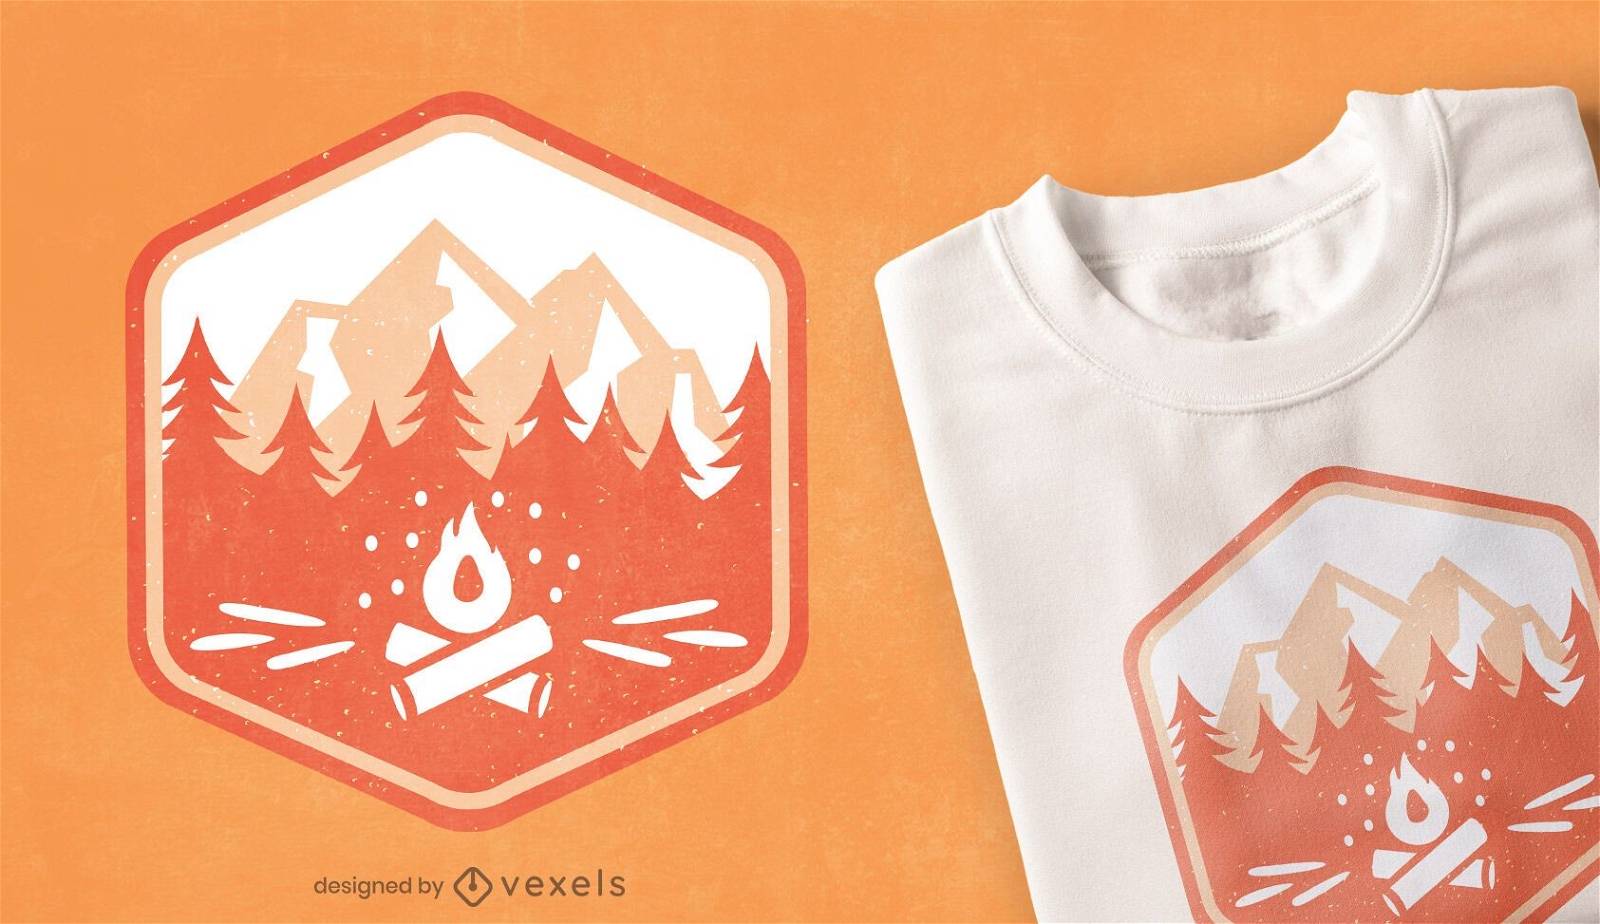 Camping badge t-shirt design